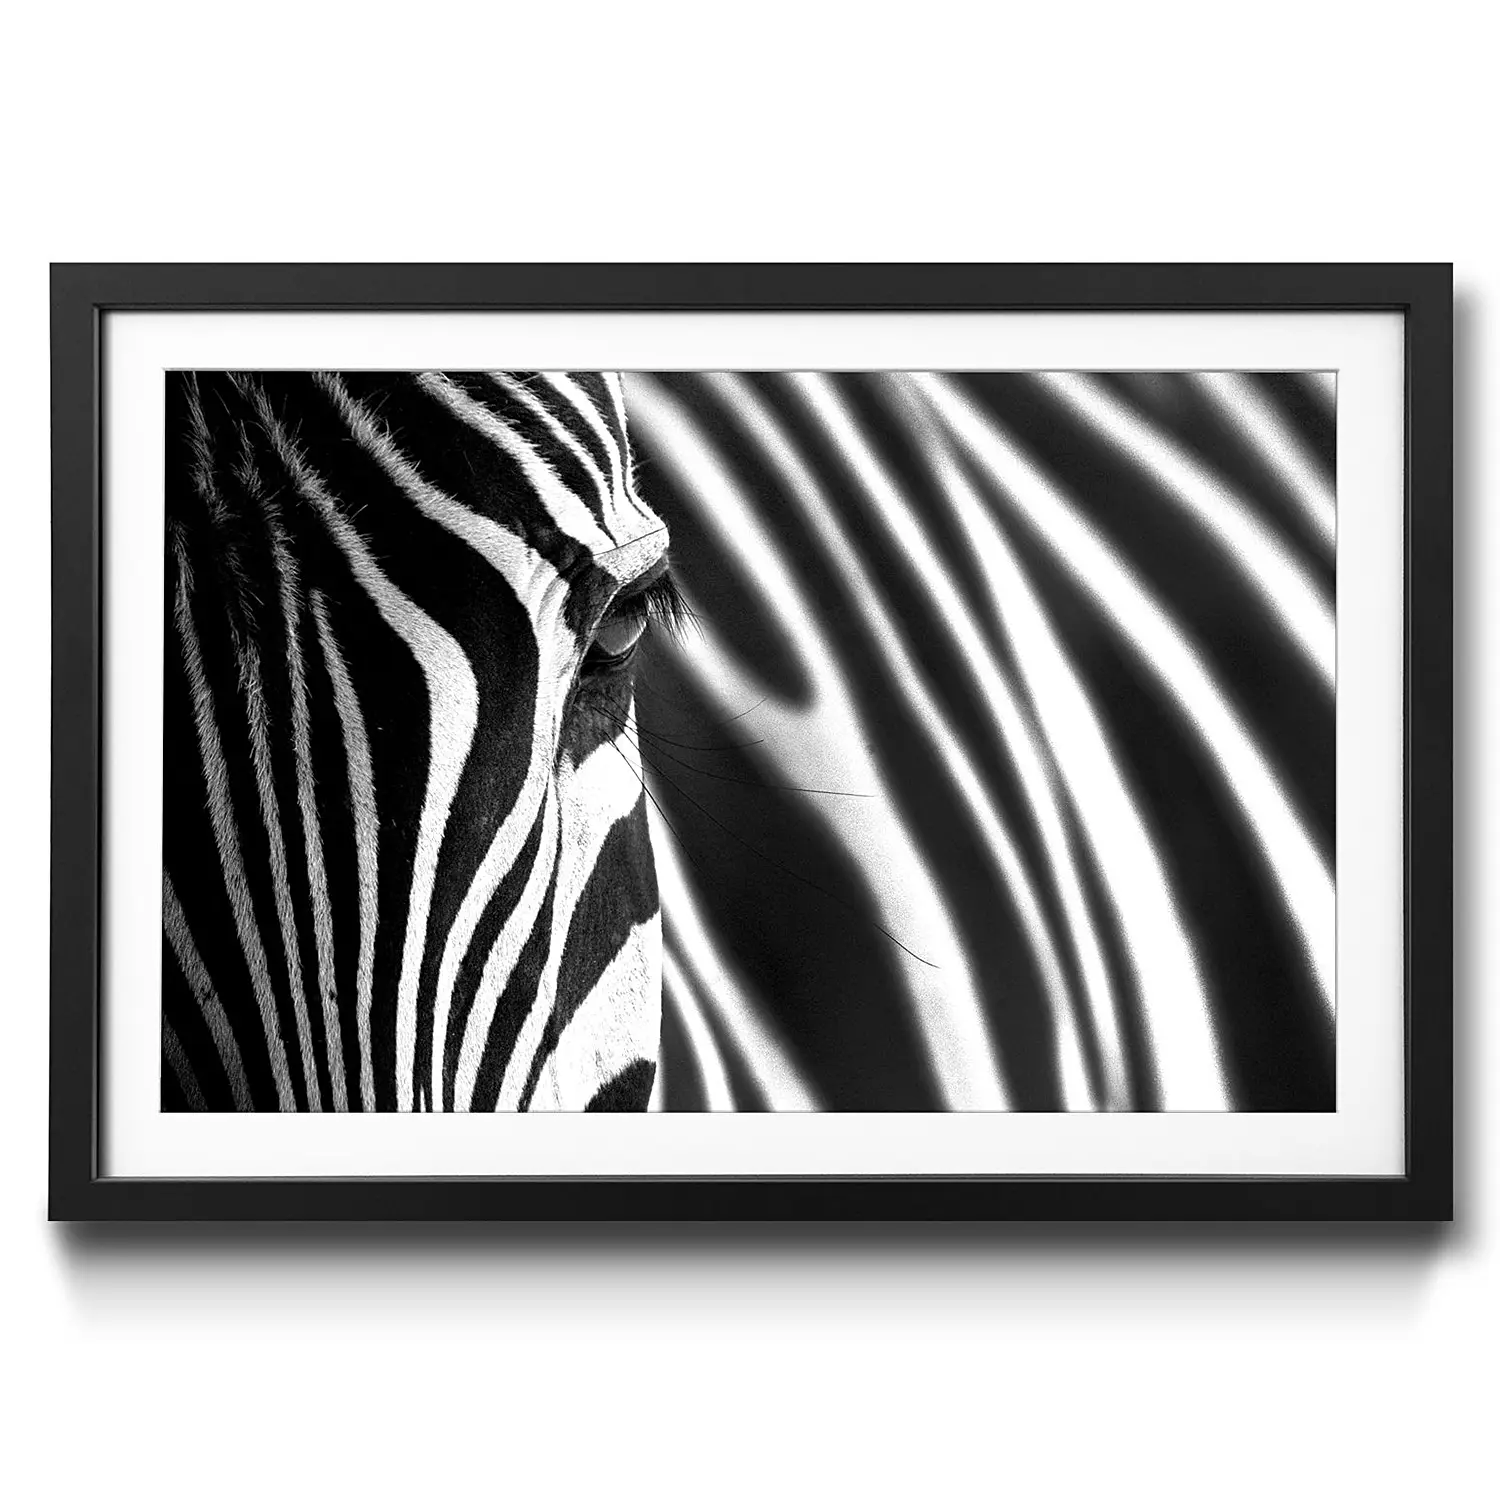 Animal Stripes Gerahmtes Bild